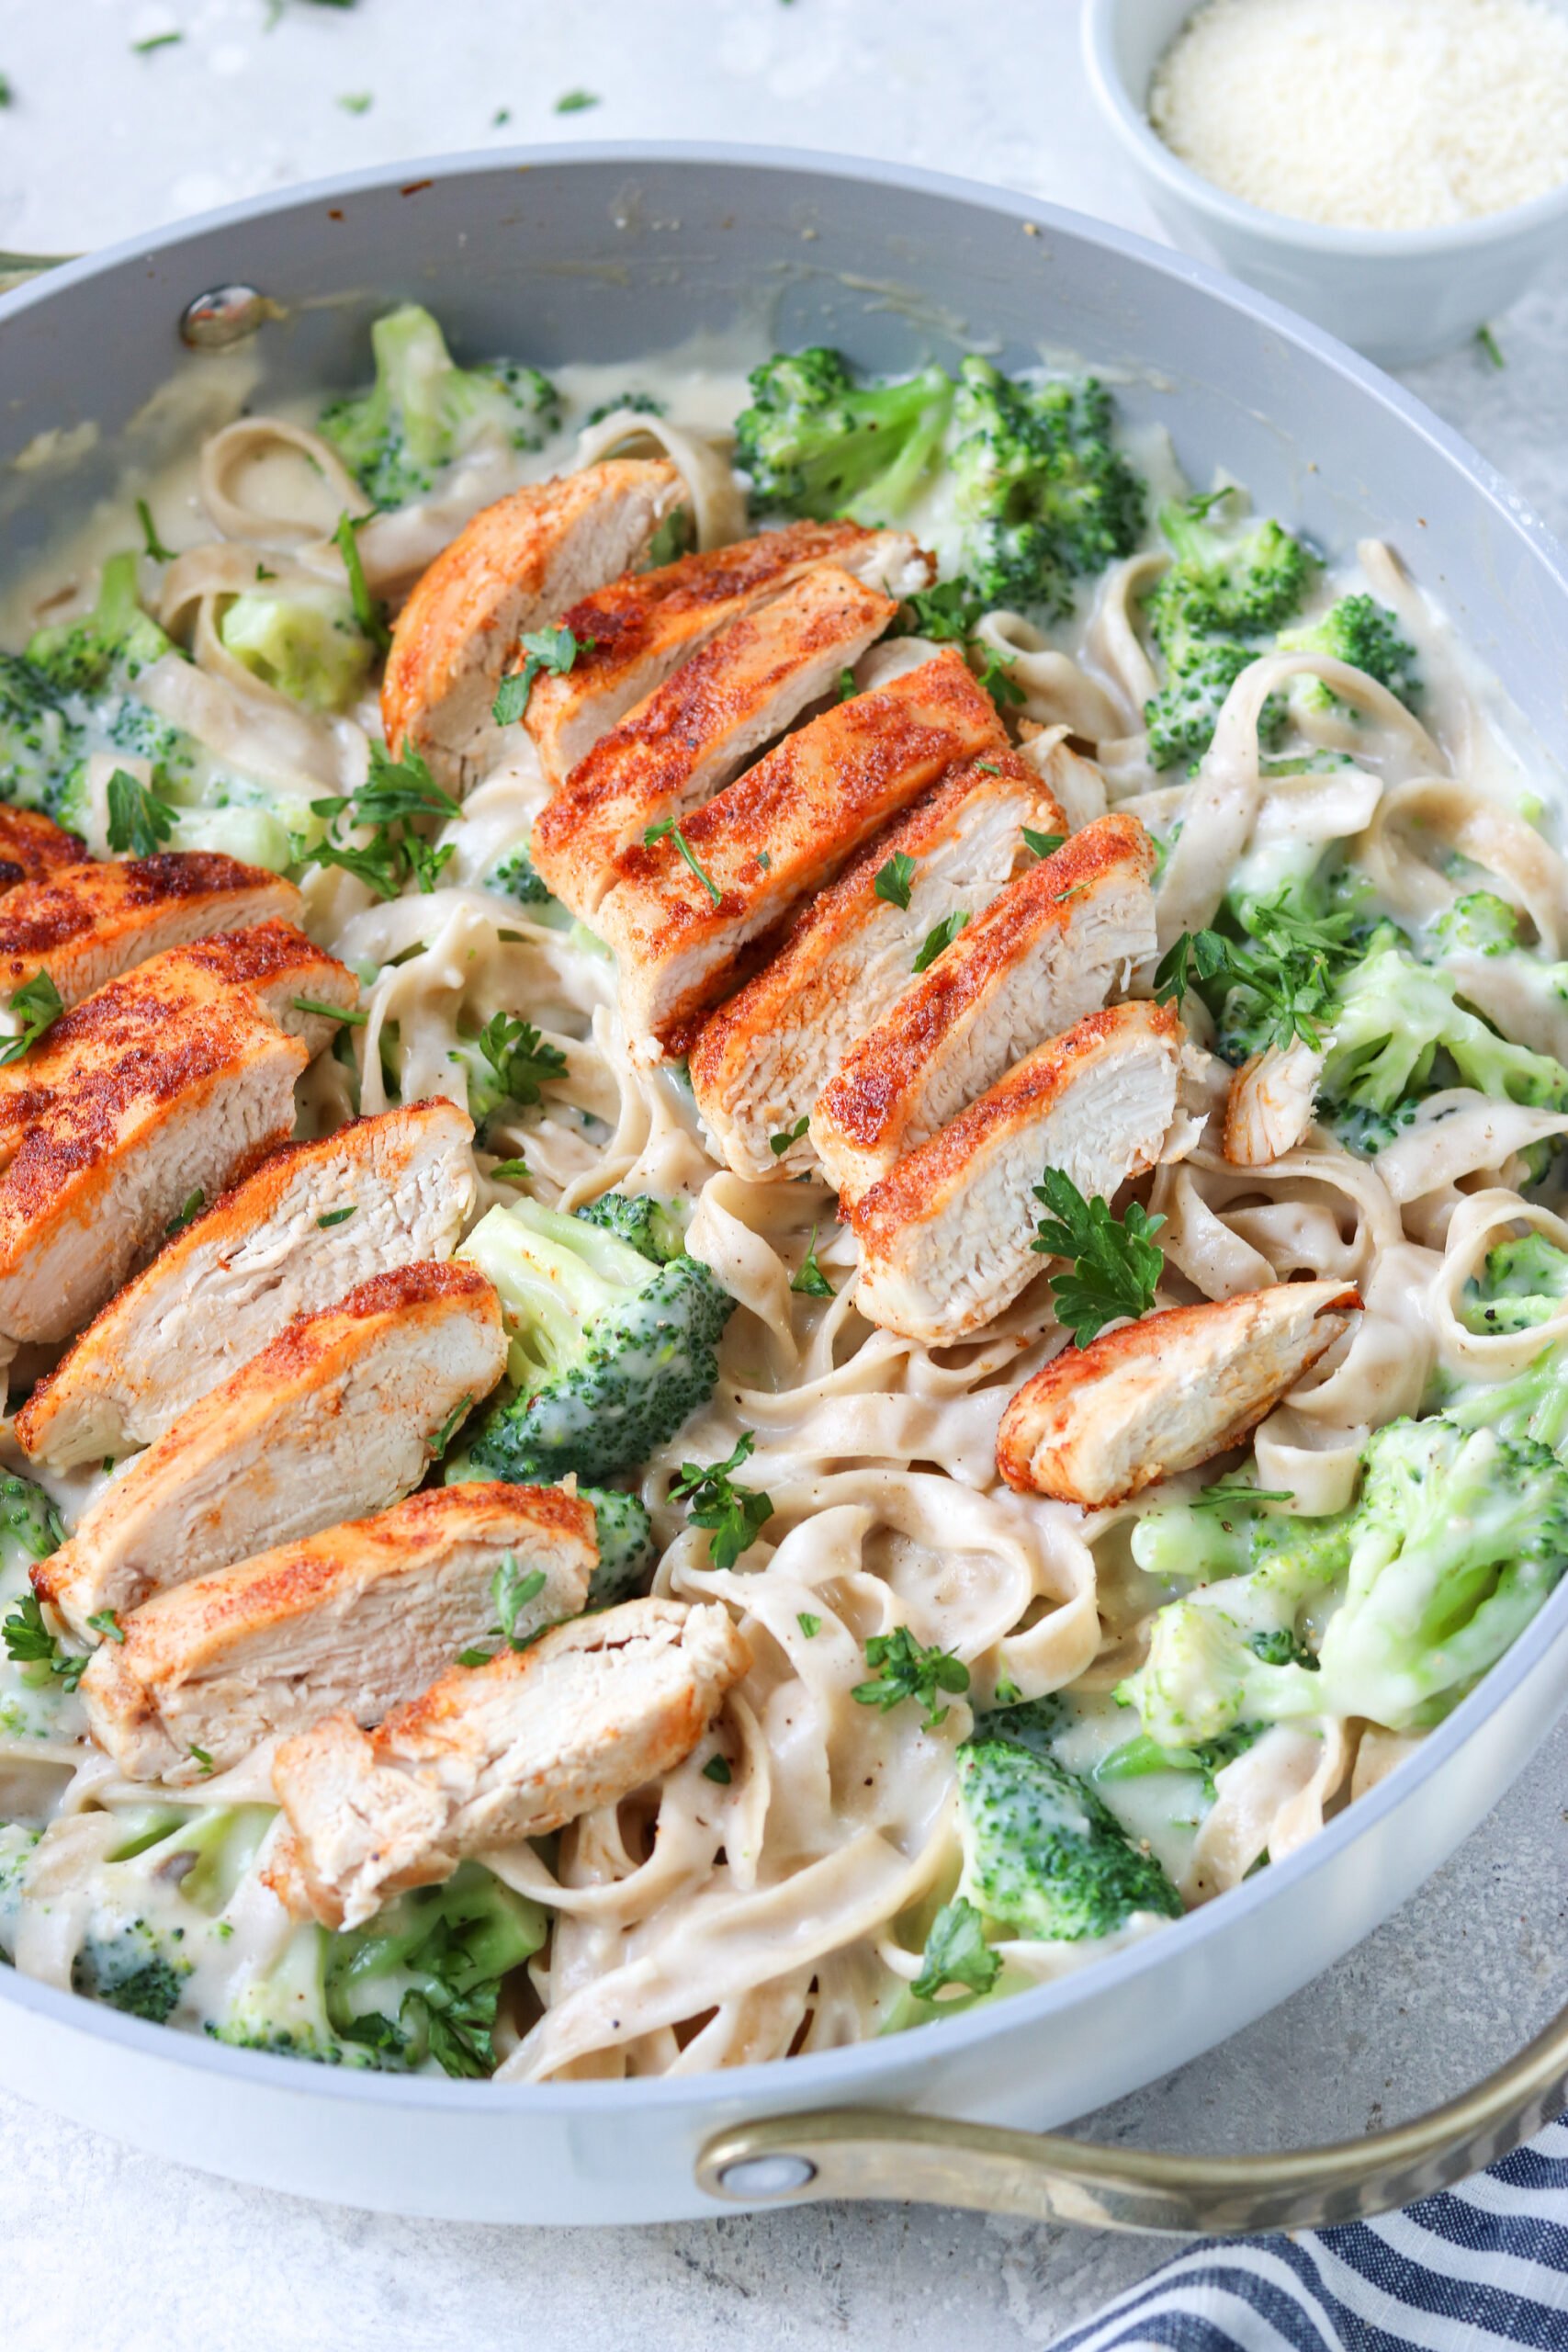 chicken and broccoli with alfredo sauce and gluten free tagliatelle pasta in a skillet